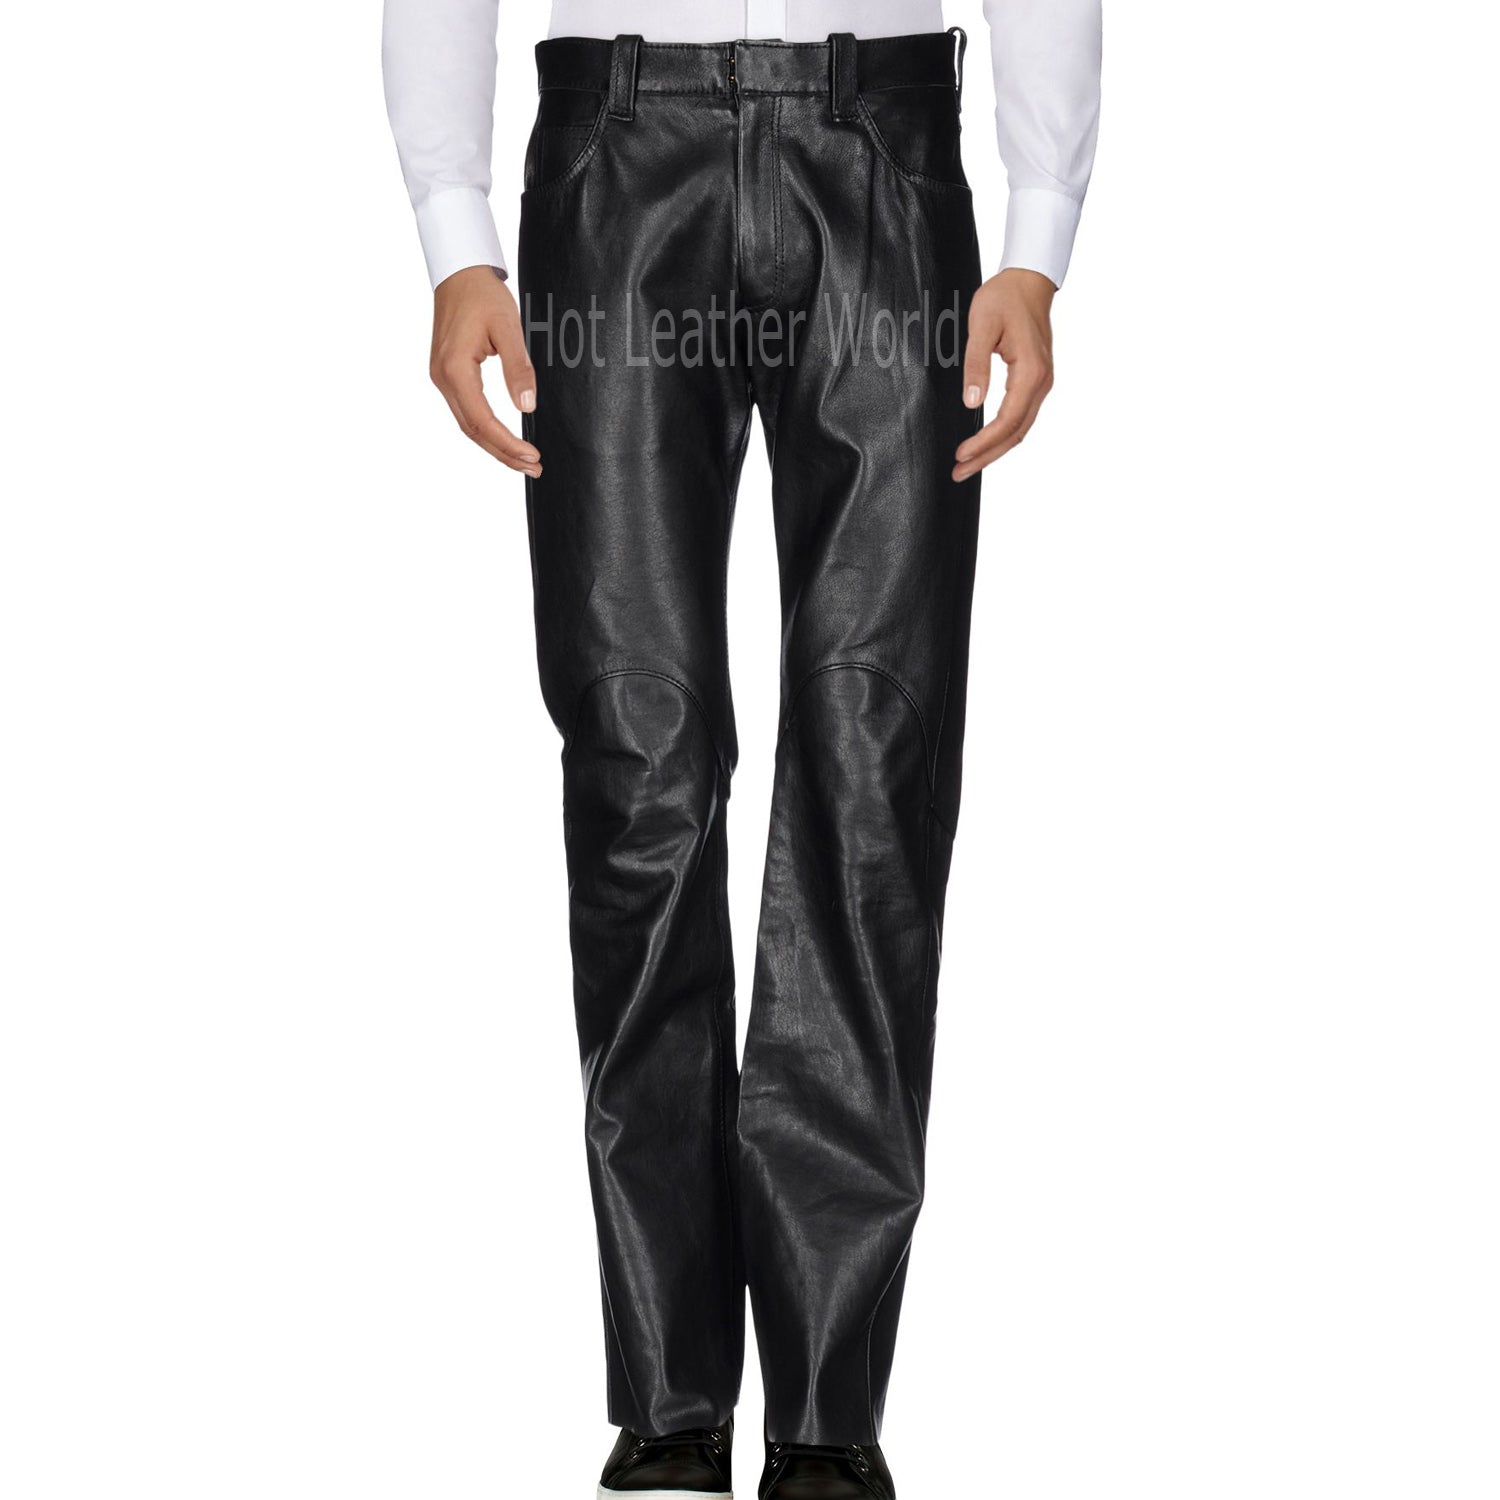 Bockle Men Leather Shorts Hot Pants Bavarian Oktoberfest Lederhose, Size:  W30/L30 Black : Amazon.co.uk: Fashion